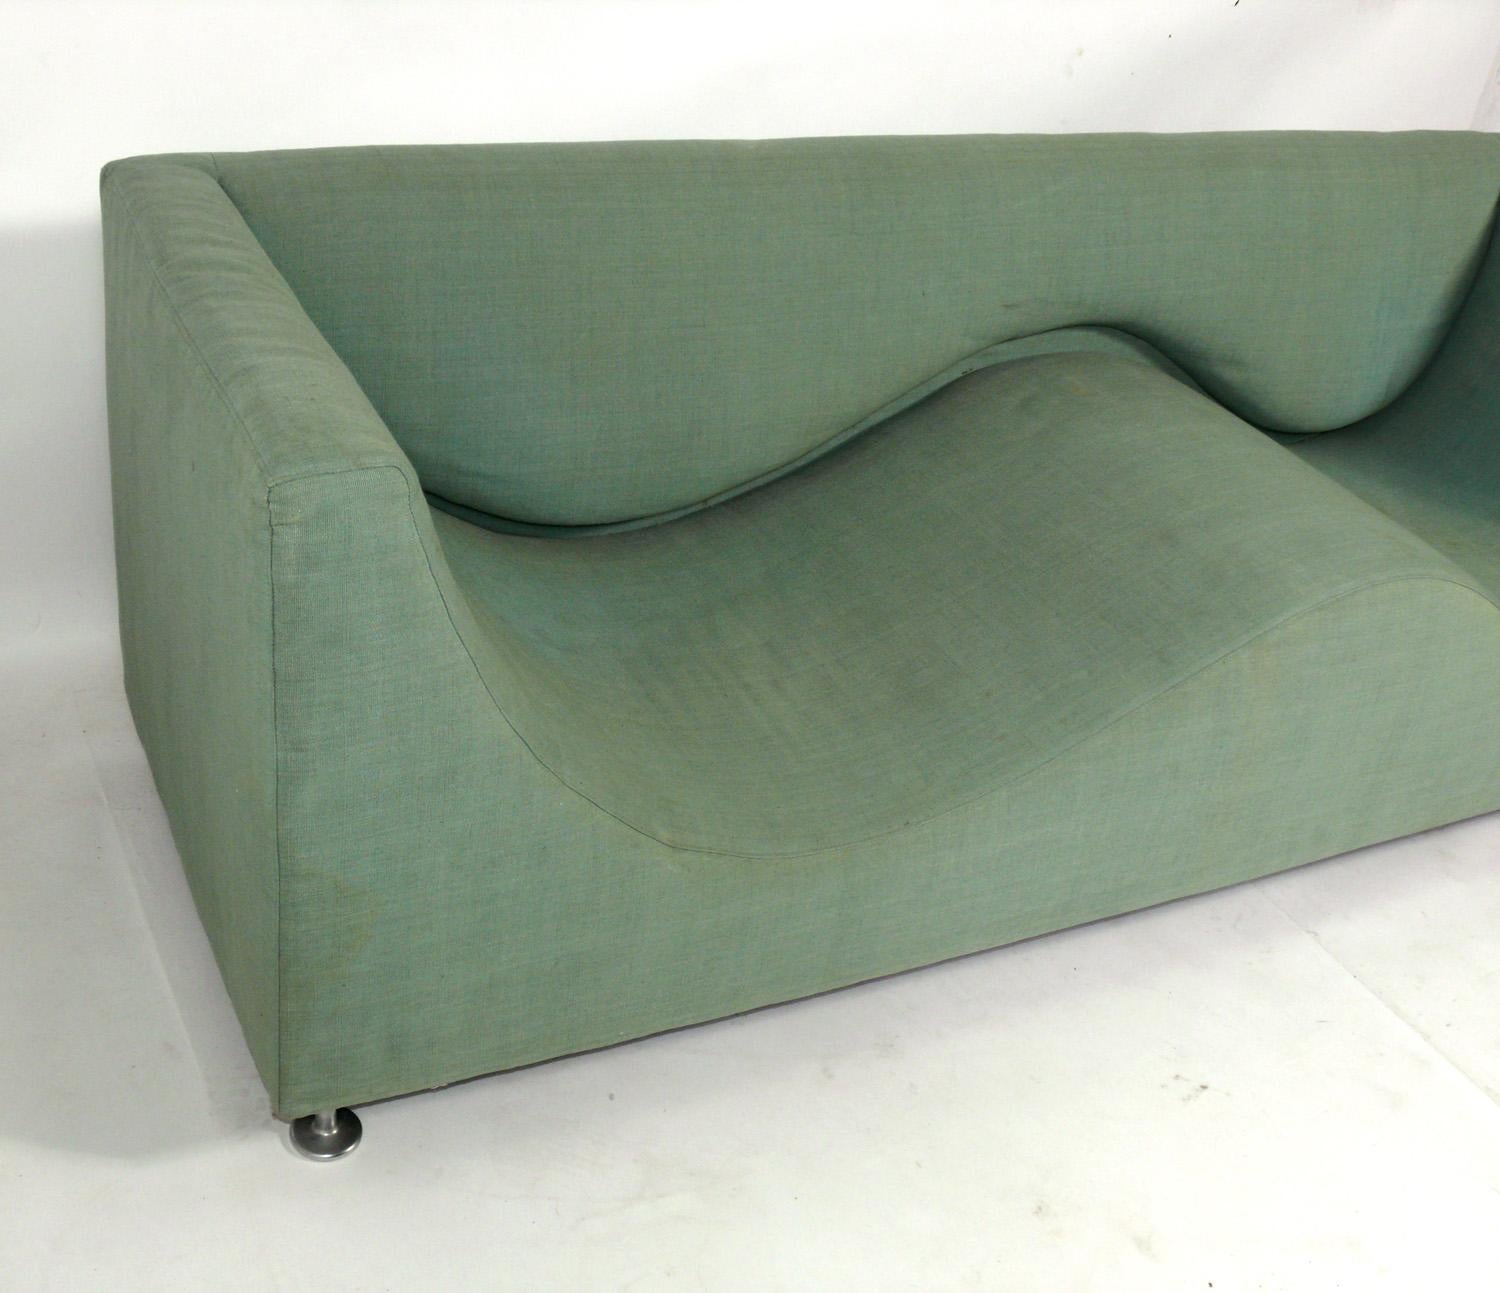 Post-Modern Jasper Morrison Wave Sofa